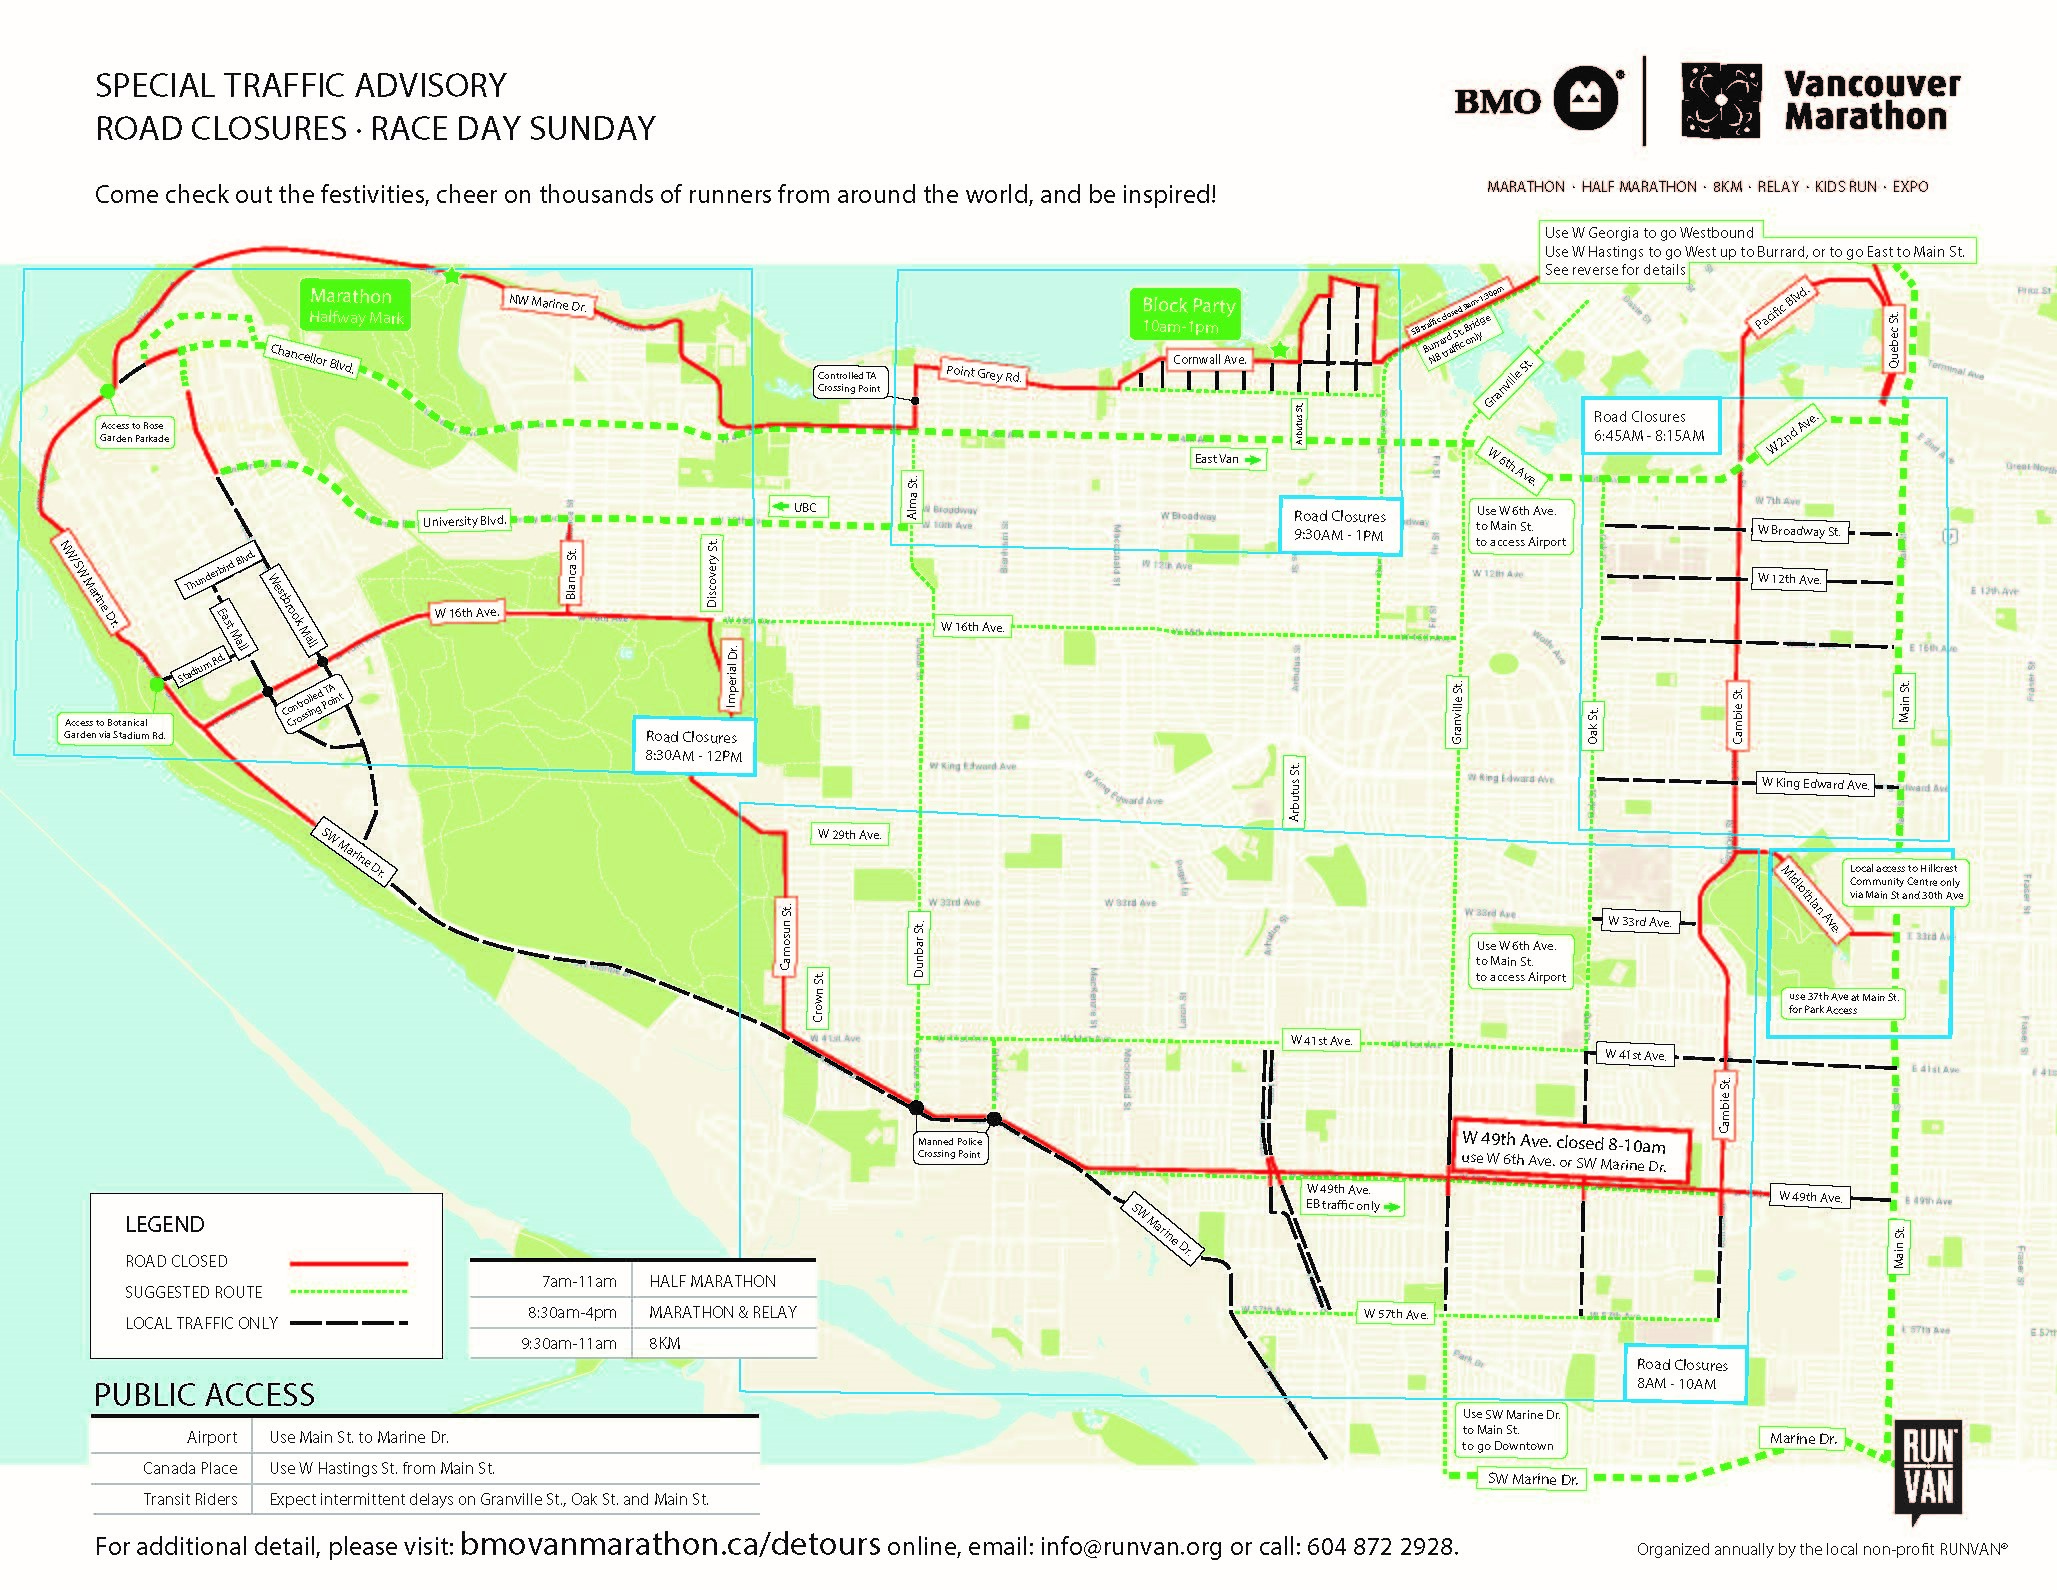 Road closures around Vancouver due to the BMO Vancouver Marathon